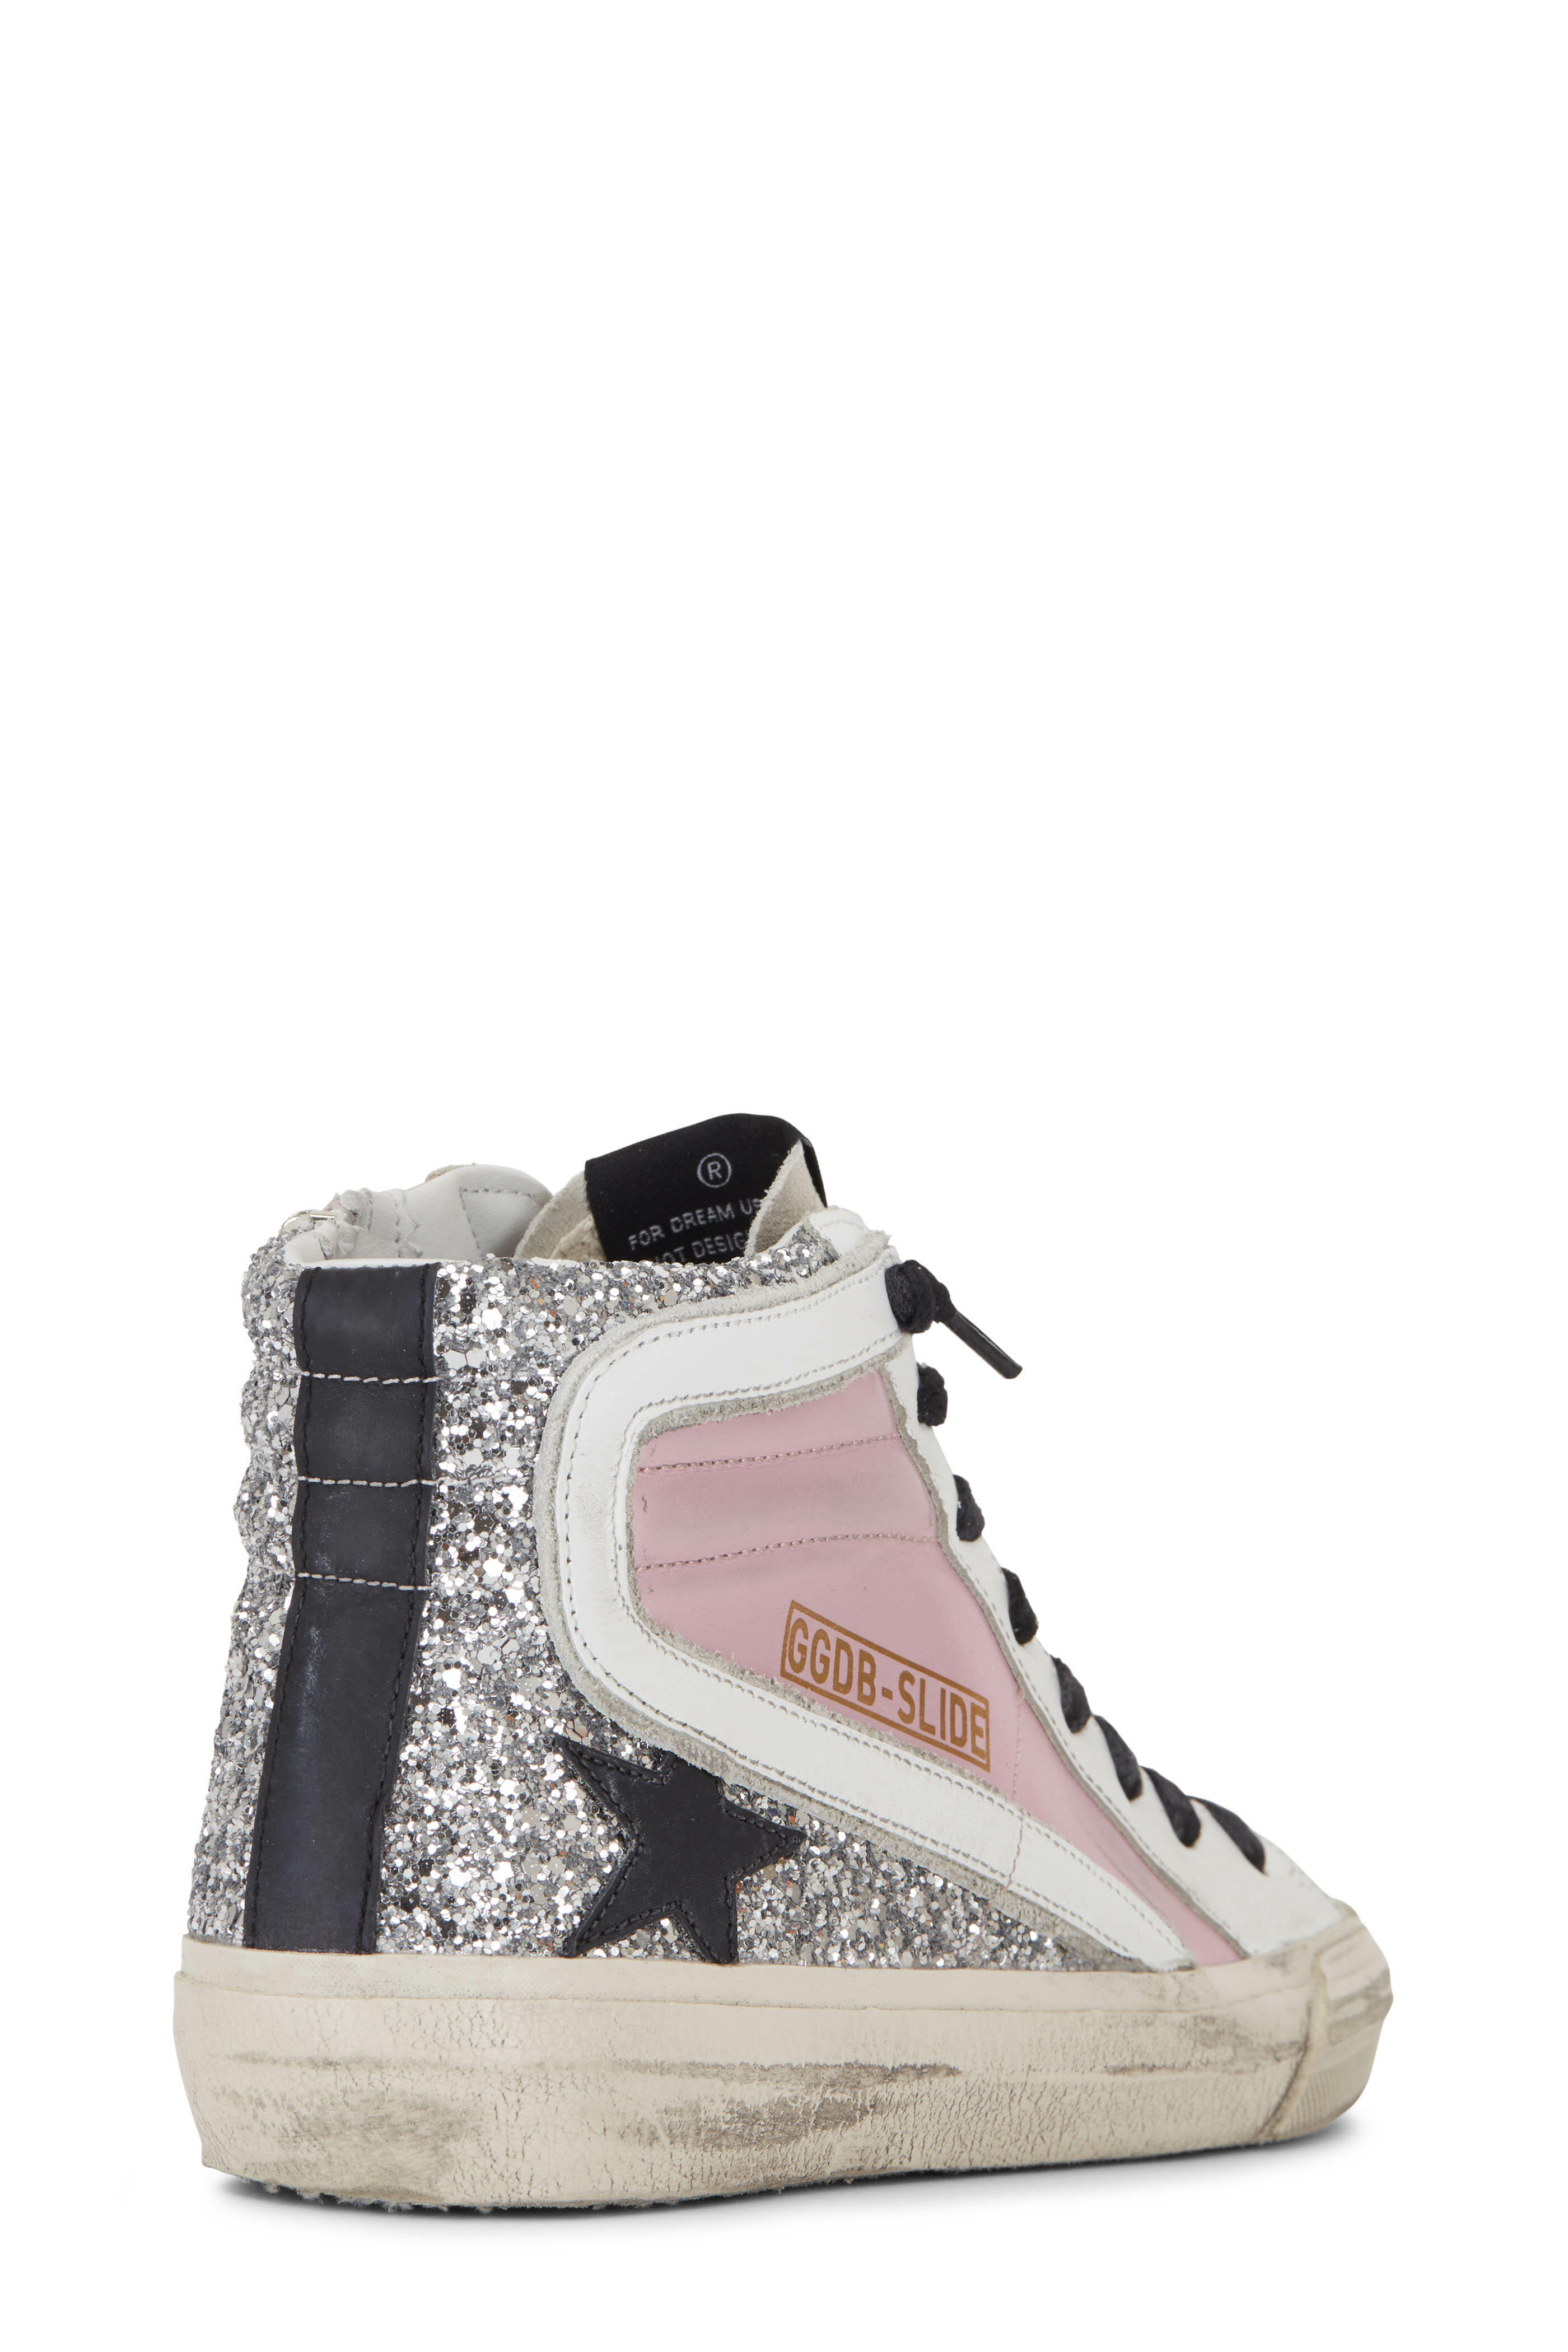 Golden Goose - Slide Silver Glitter & Pink Leather Sneaker